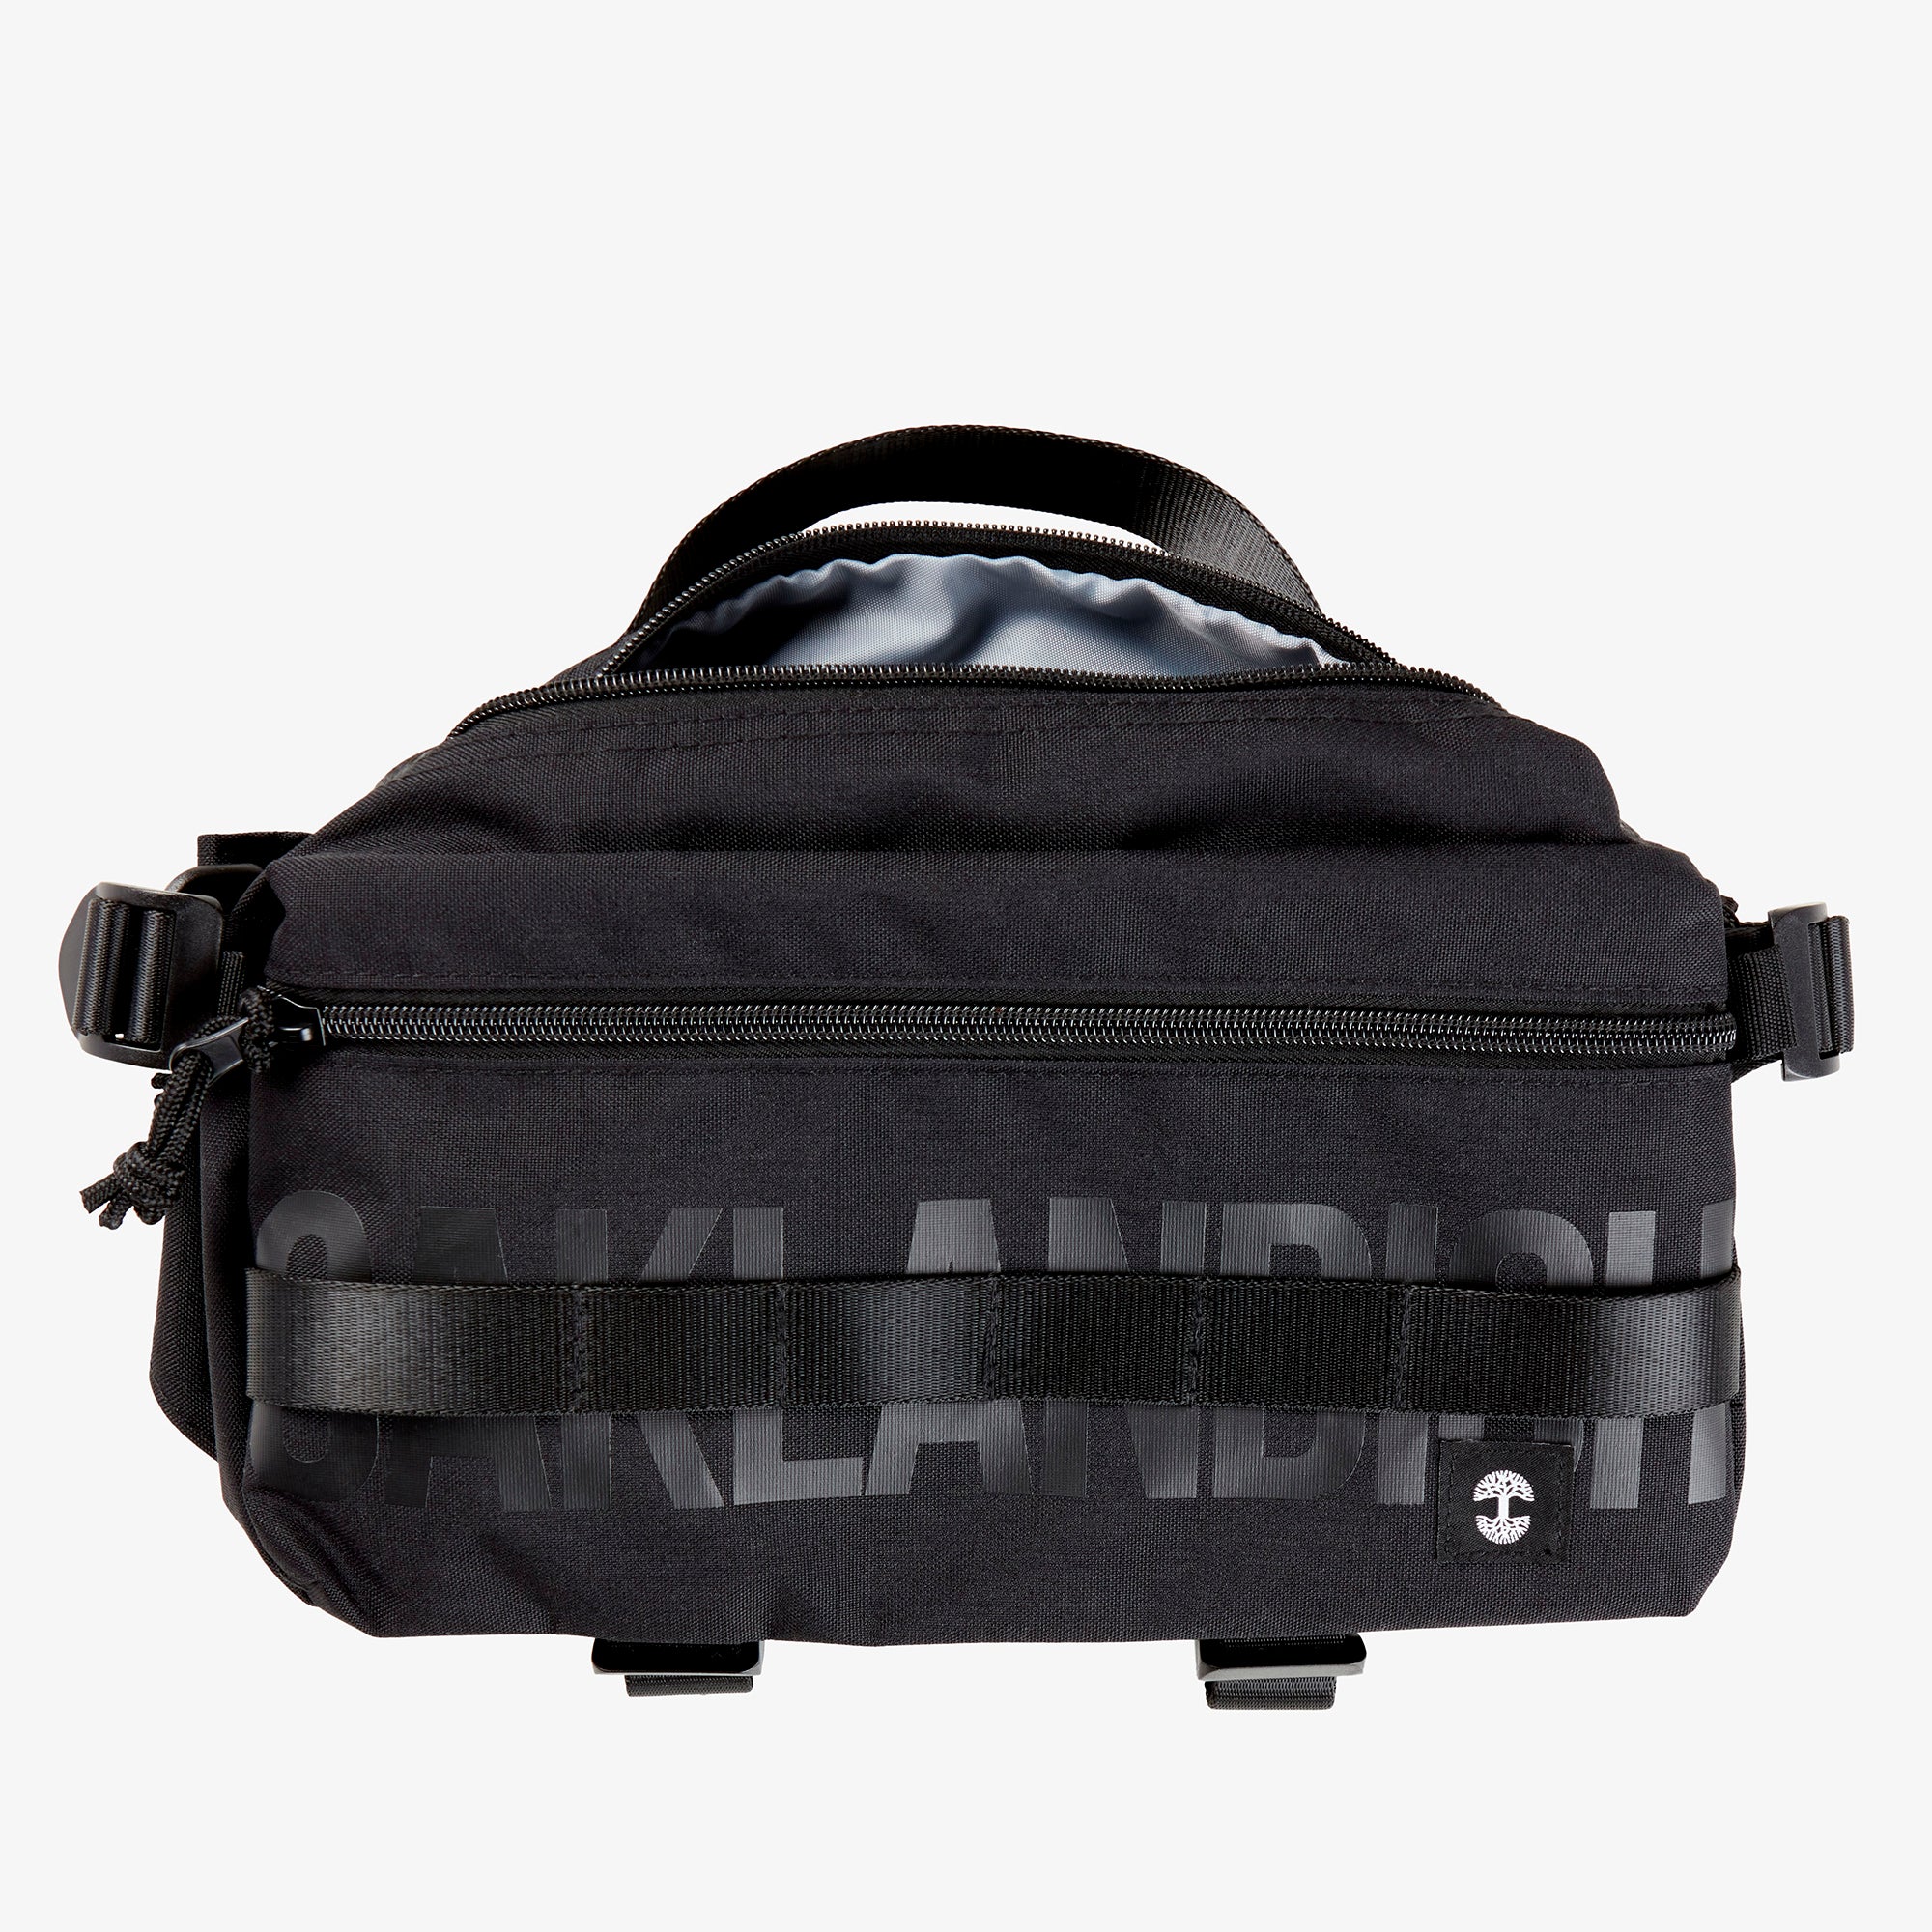 A black nylon hip bag with a black Oaklandish wordmark, with open top zipper, waist belt, & small white Oaklandish tree logo.